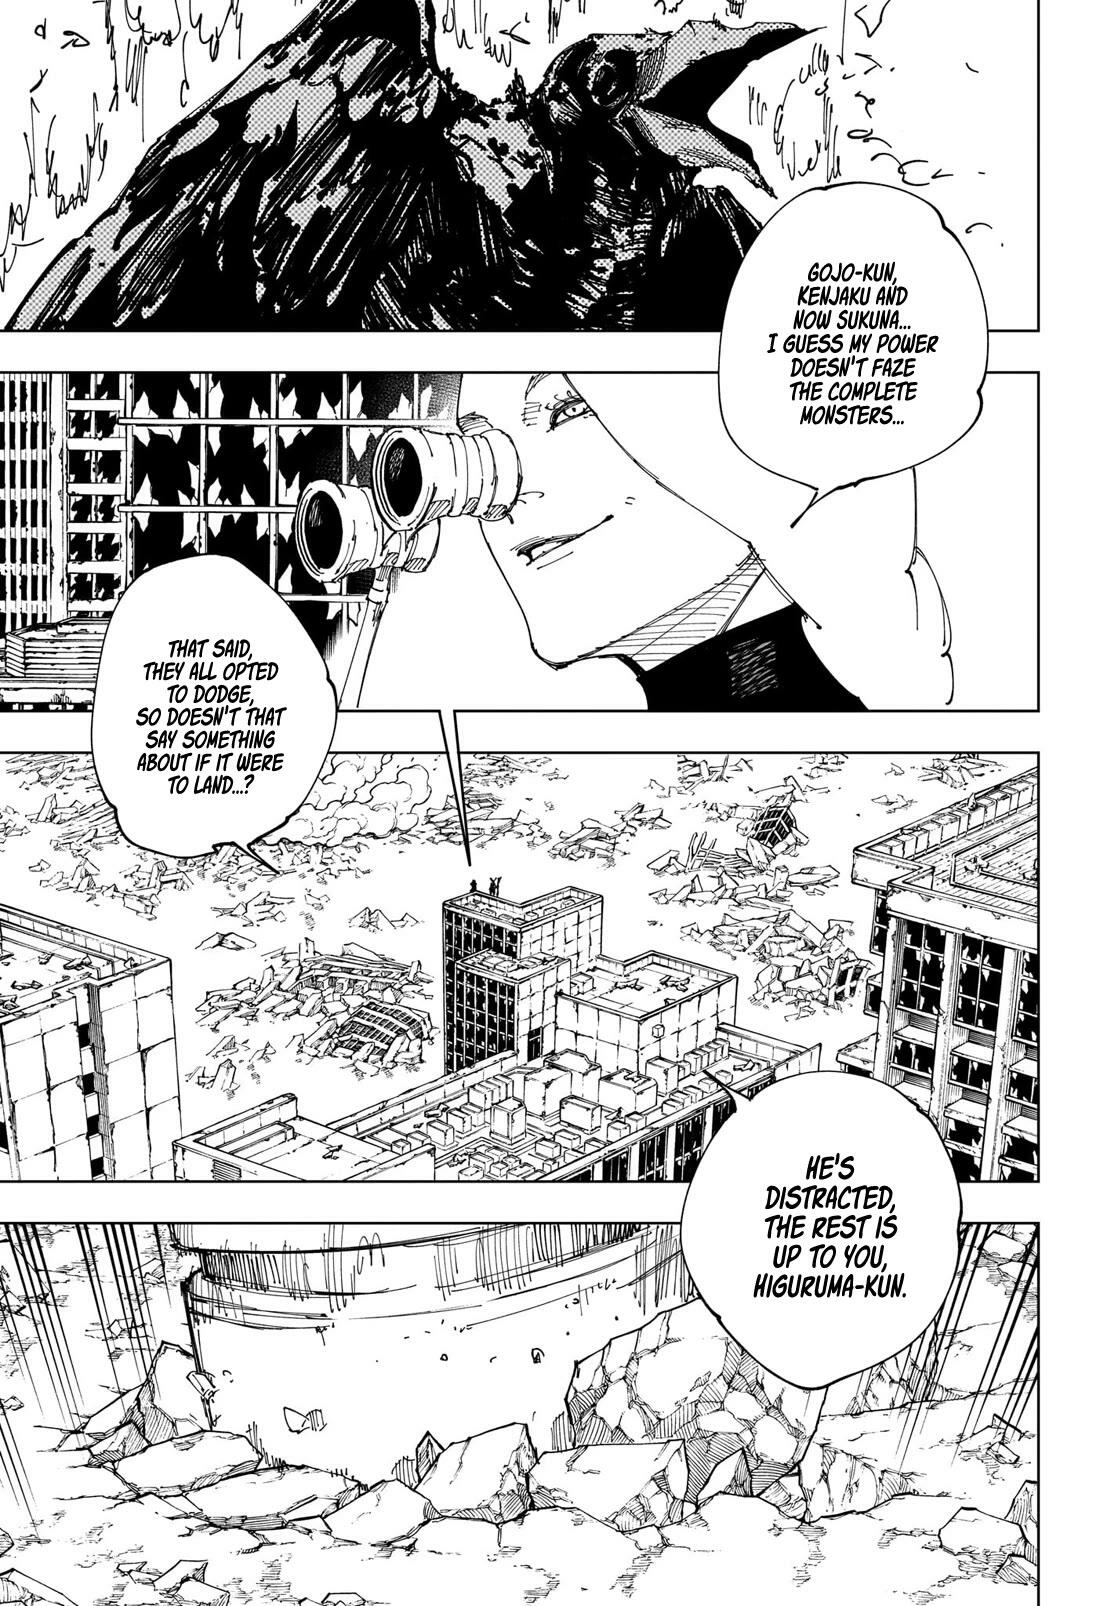 Jujutsu Kaisen Chapter 244: The Decisive Battle In The Uninhabited, Demon-Infested Shinjuku ⑯ page 14 - Mangakakalot